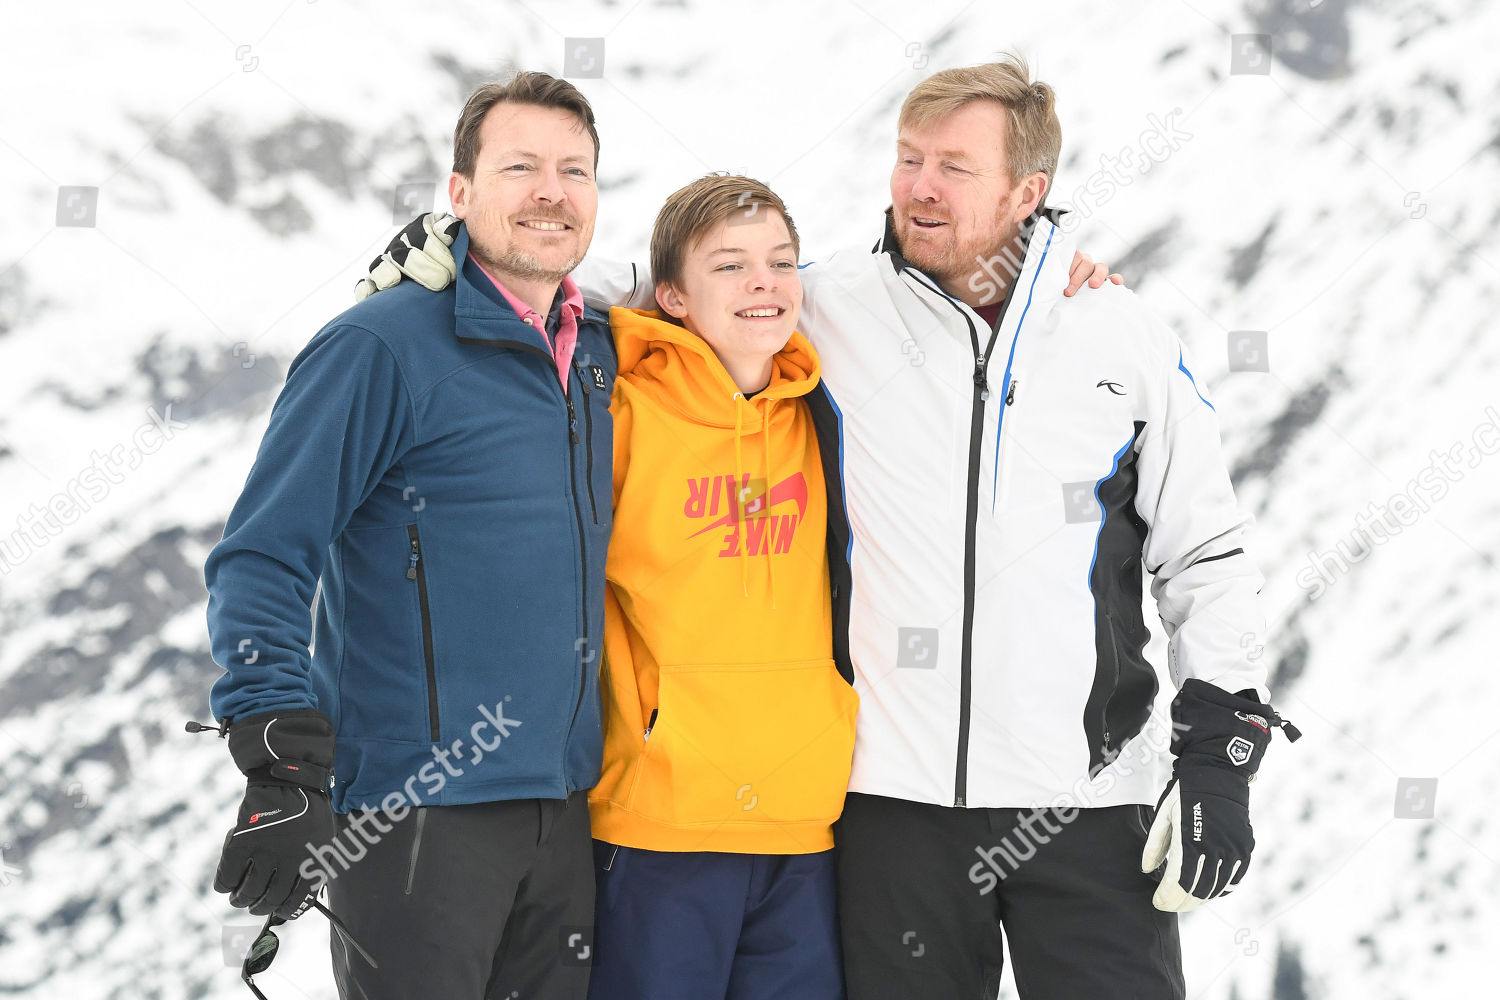 dutch-royal-family-winter-holiday-photocall-lech-austria-shutterstock-editorial-10566567x.jpg